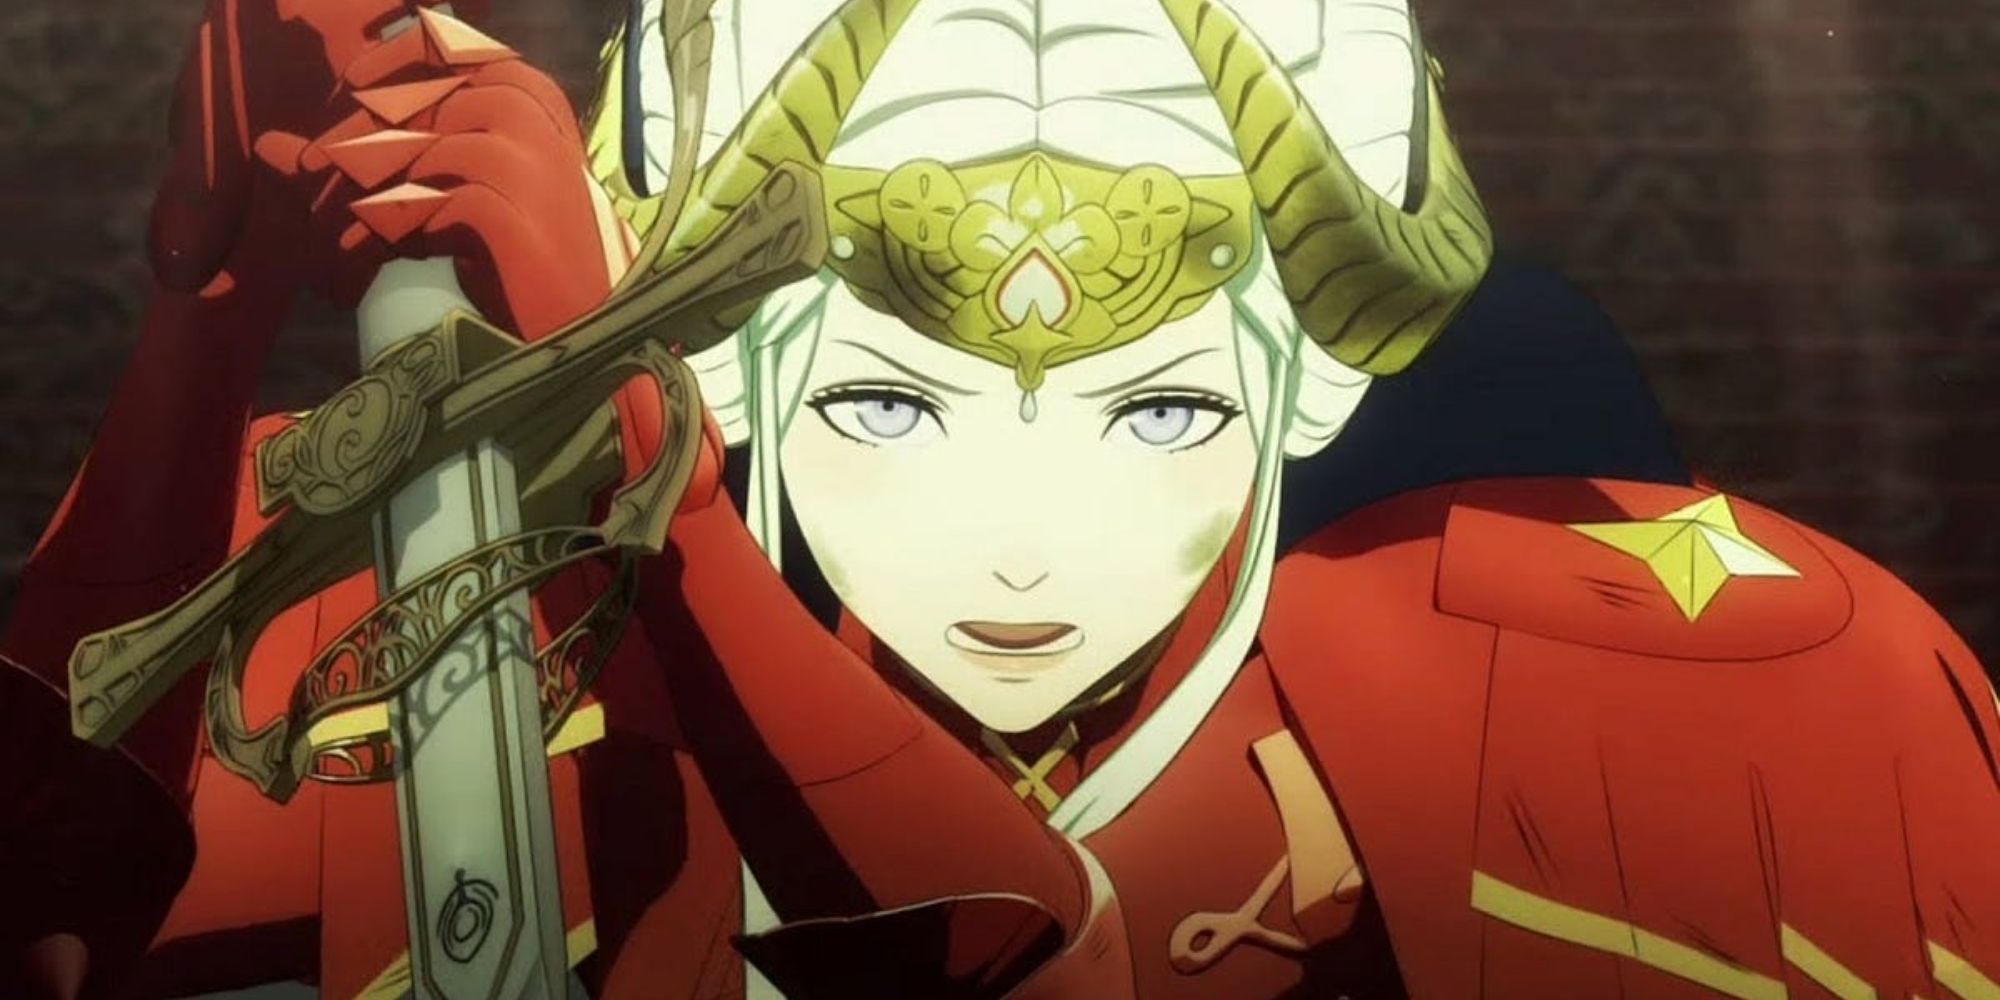 Edelgard in her Flame Emperor attire